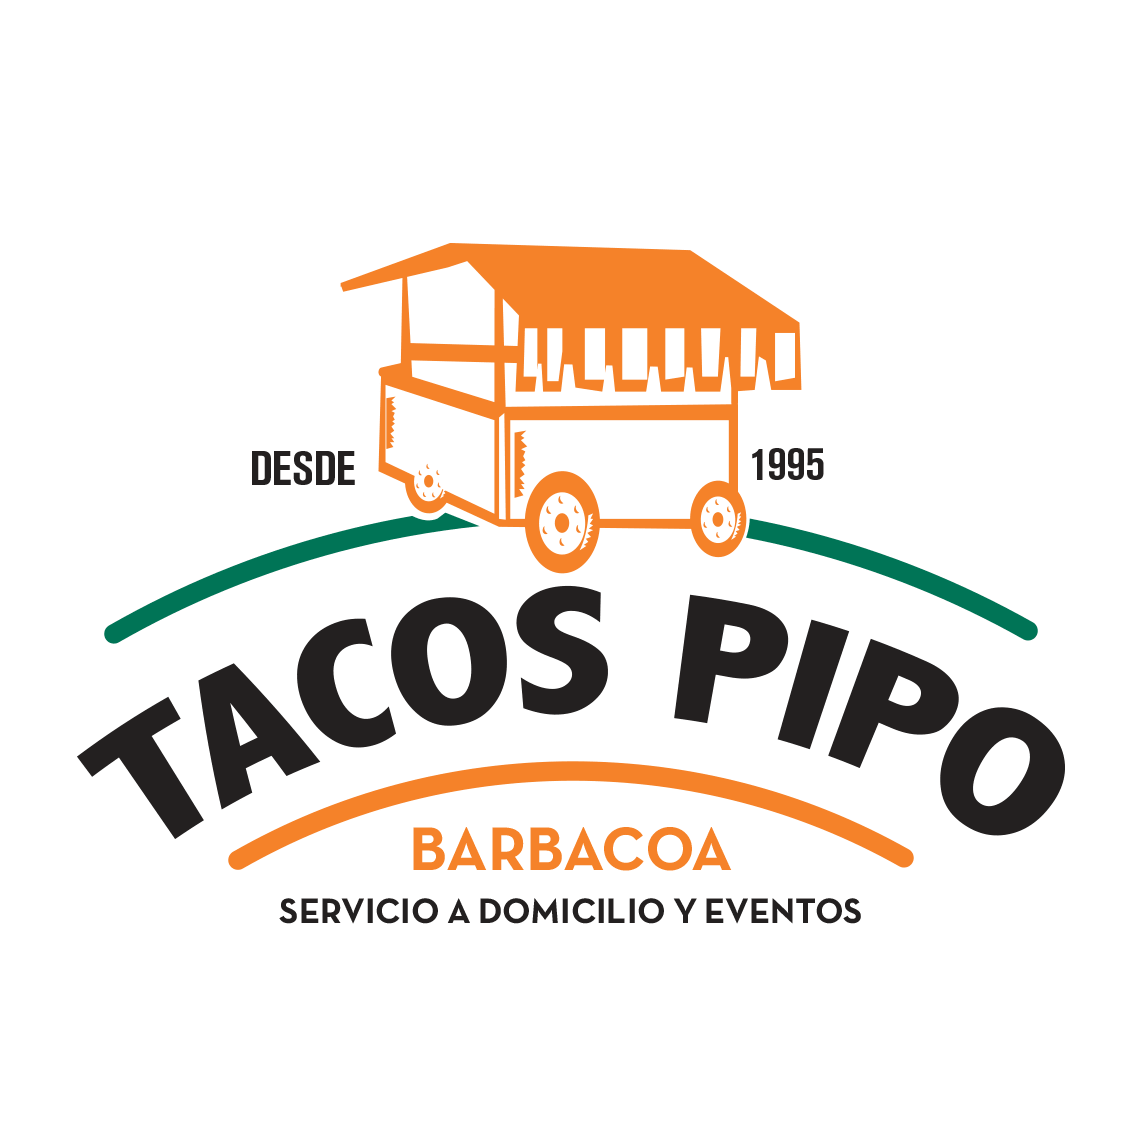 Tacos Pipo